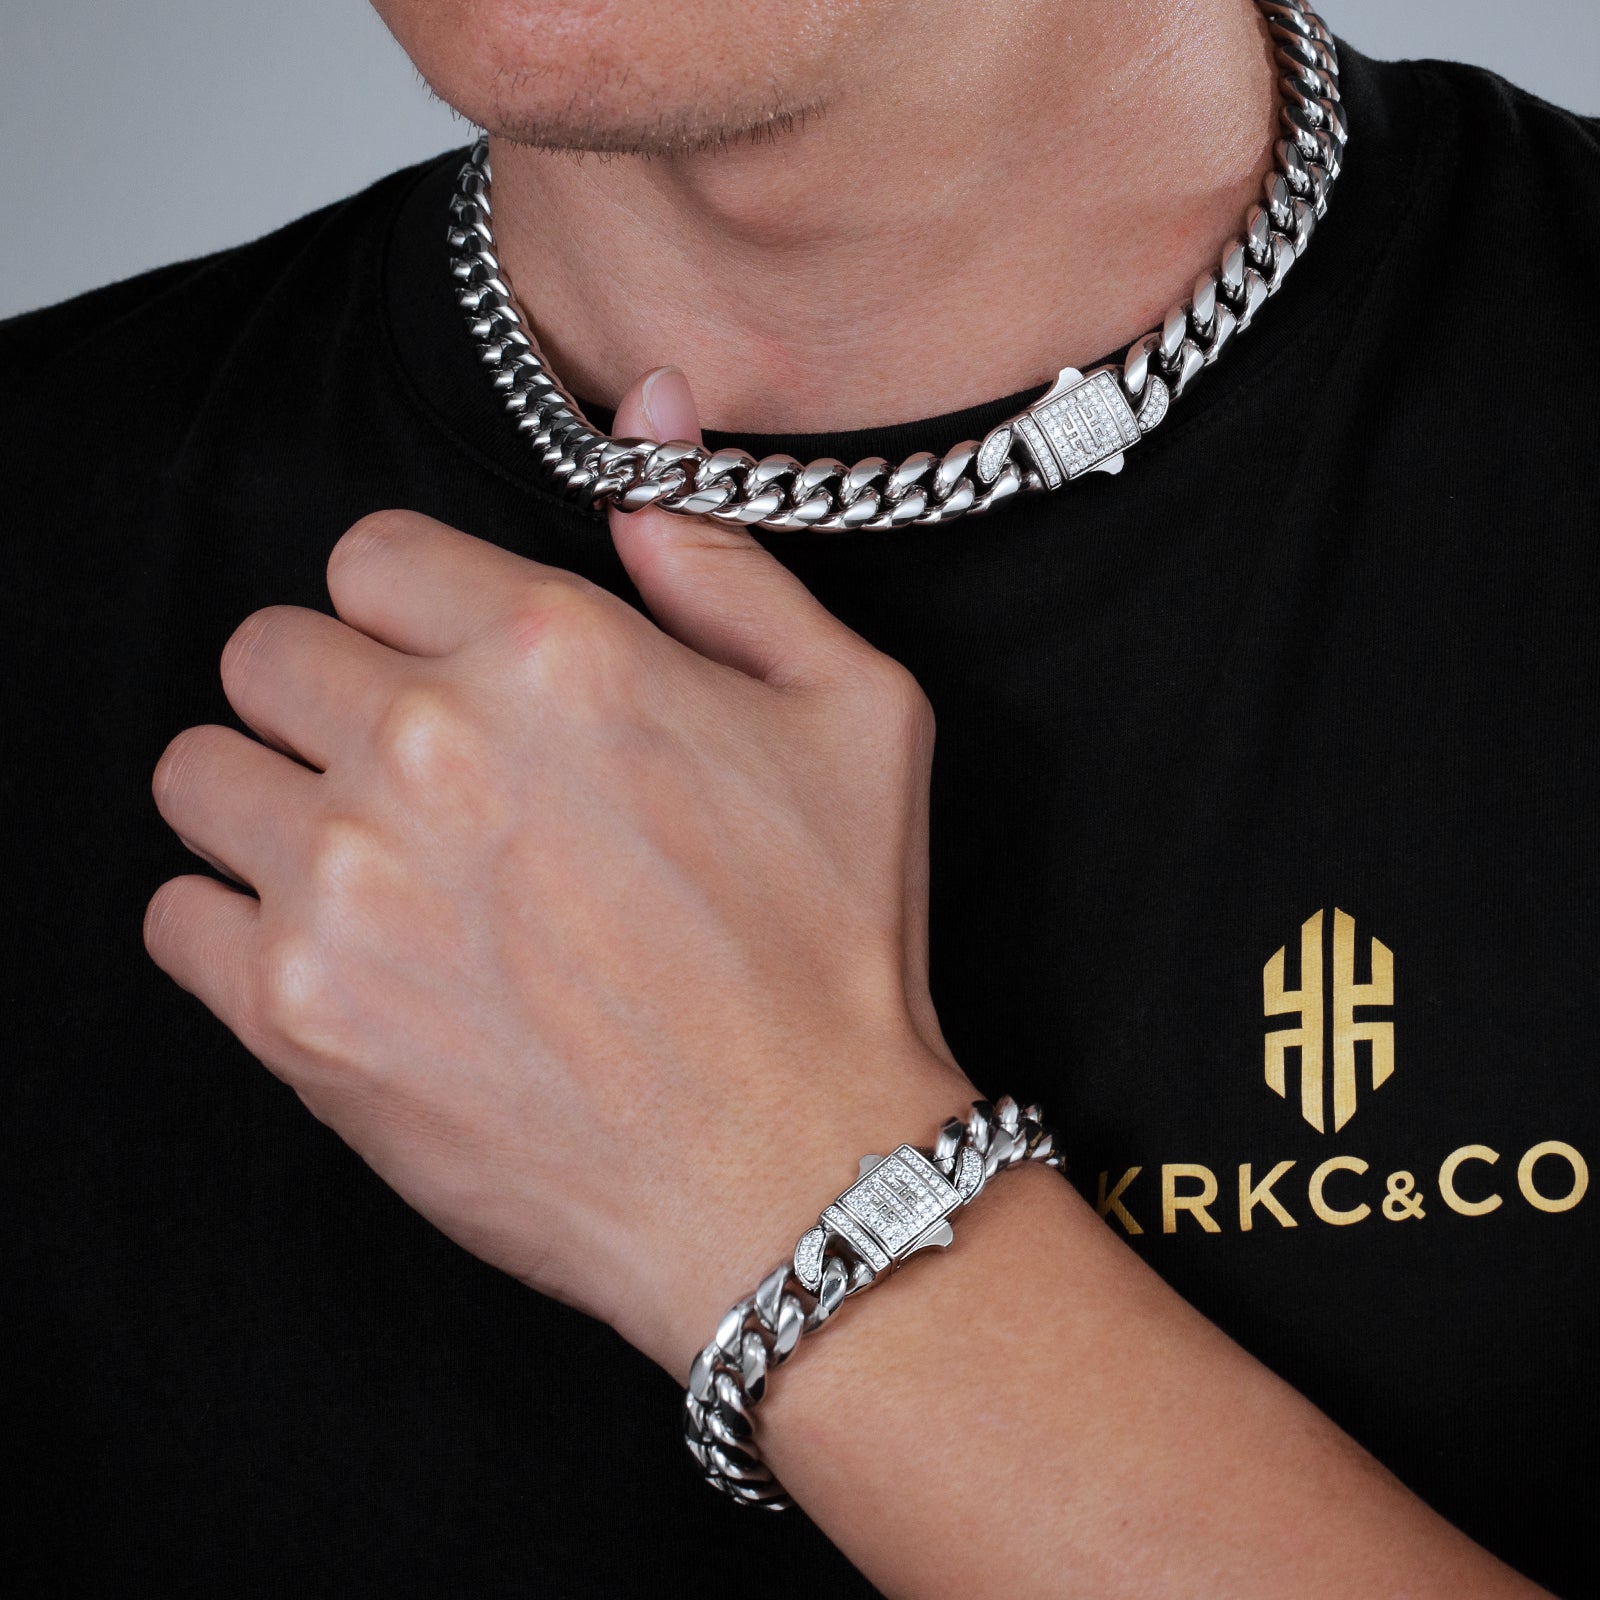 KRKC&CO 12mm Iced Out Box Clasp Miami Cuban Link Bracelet